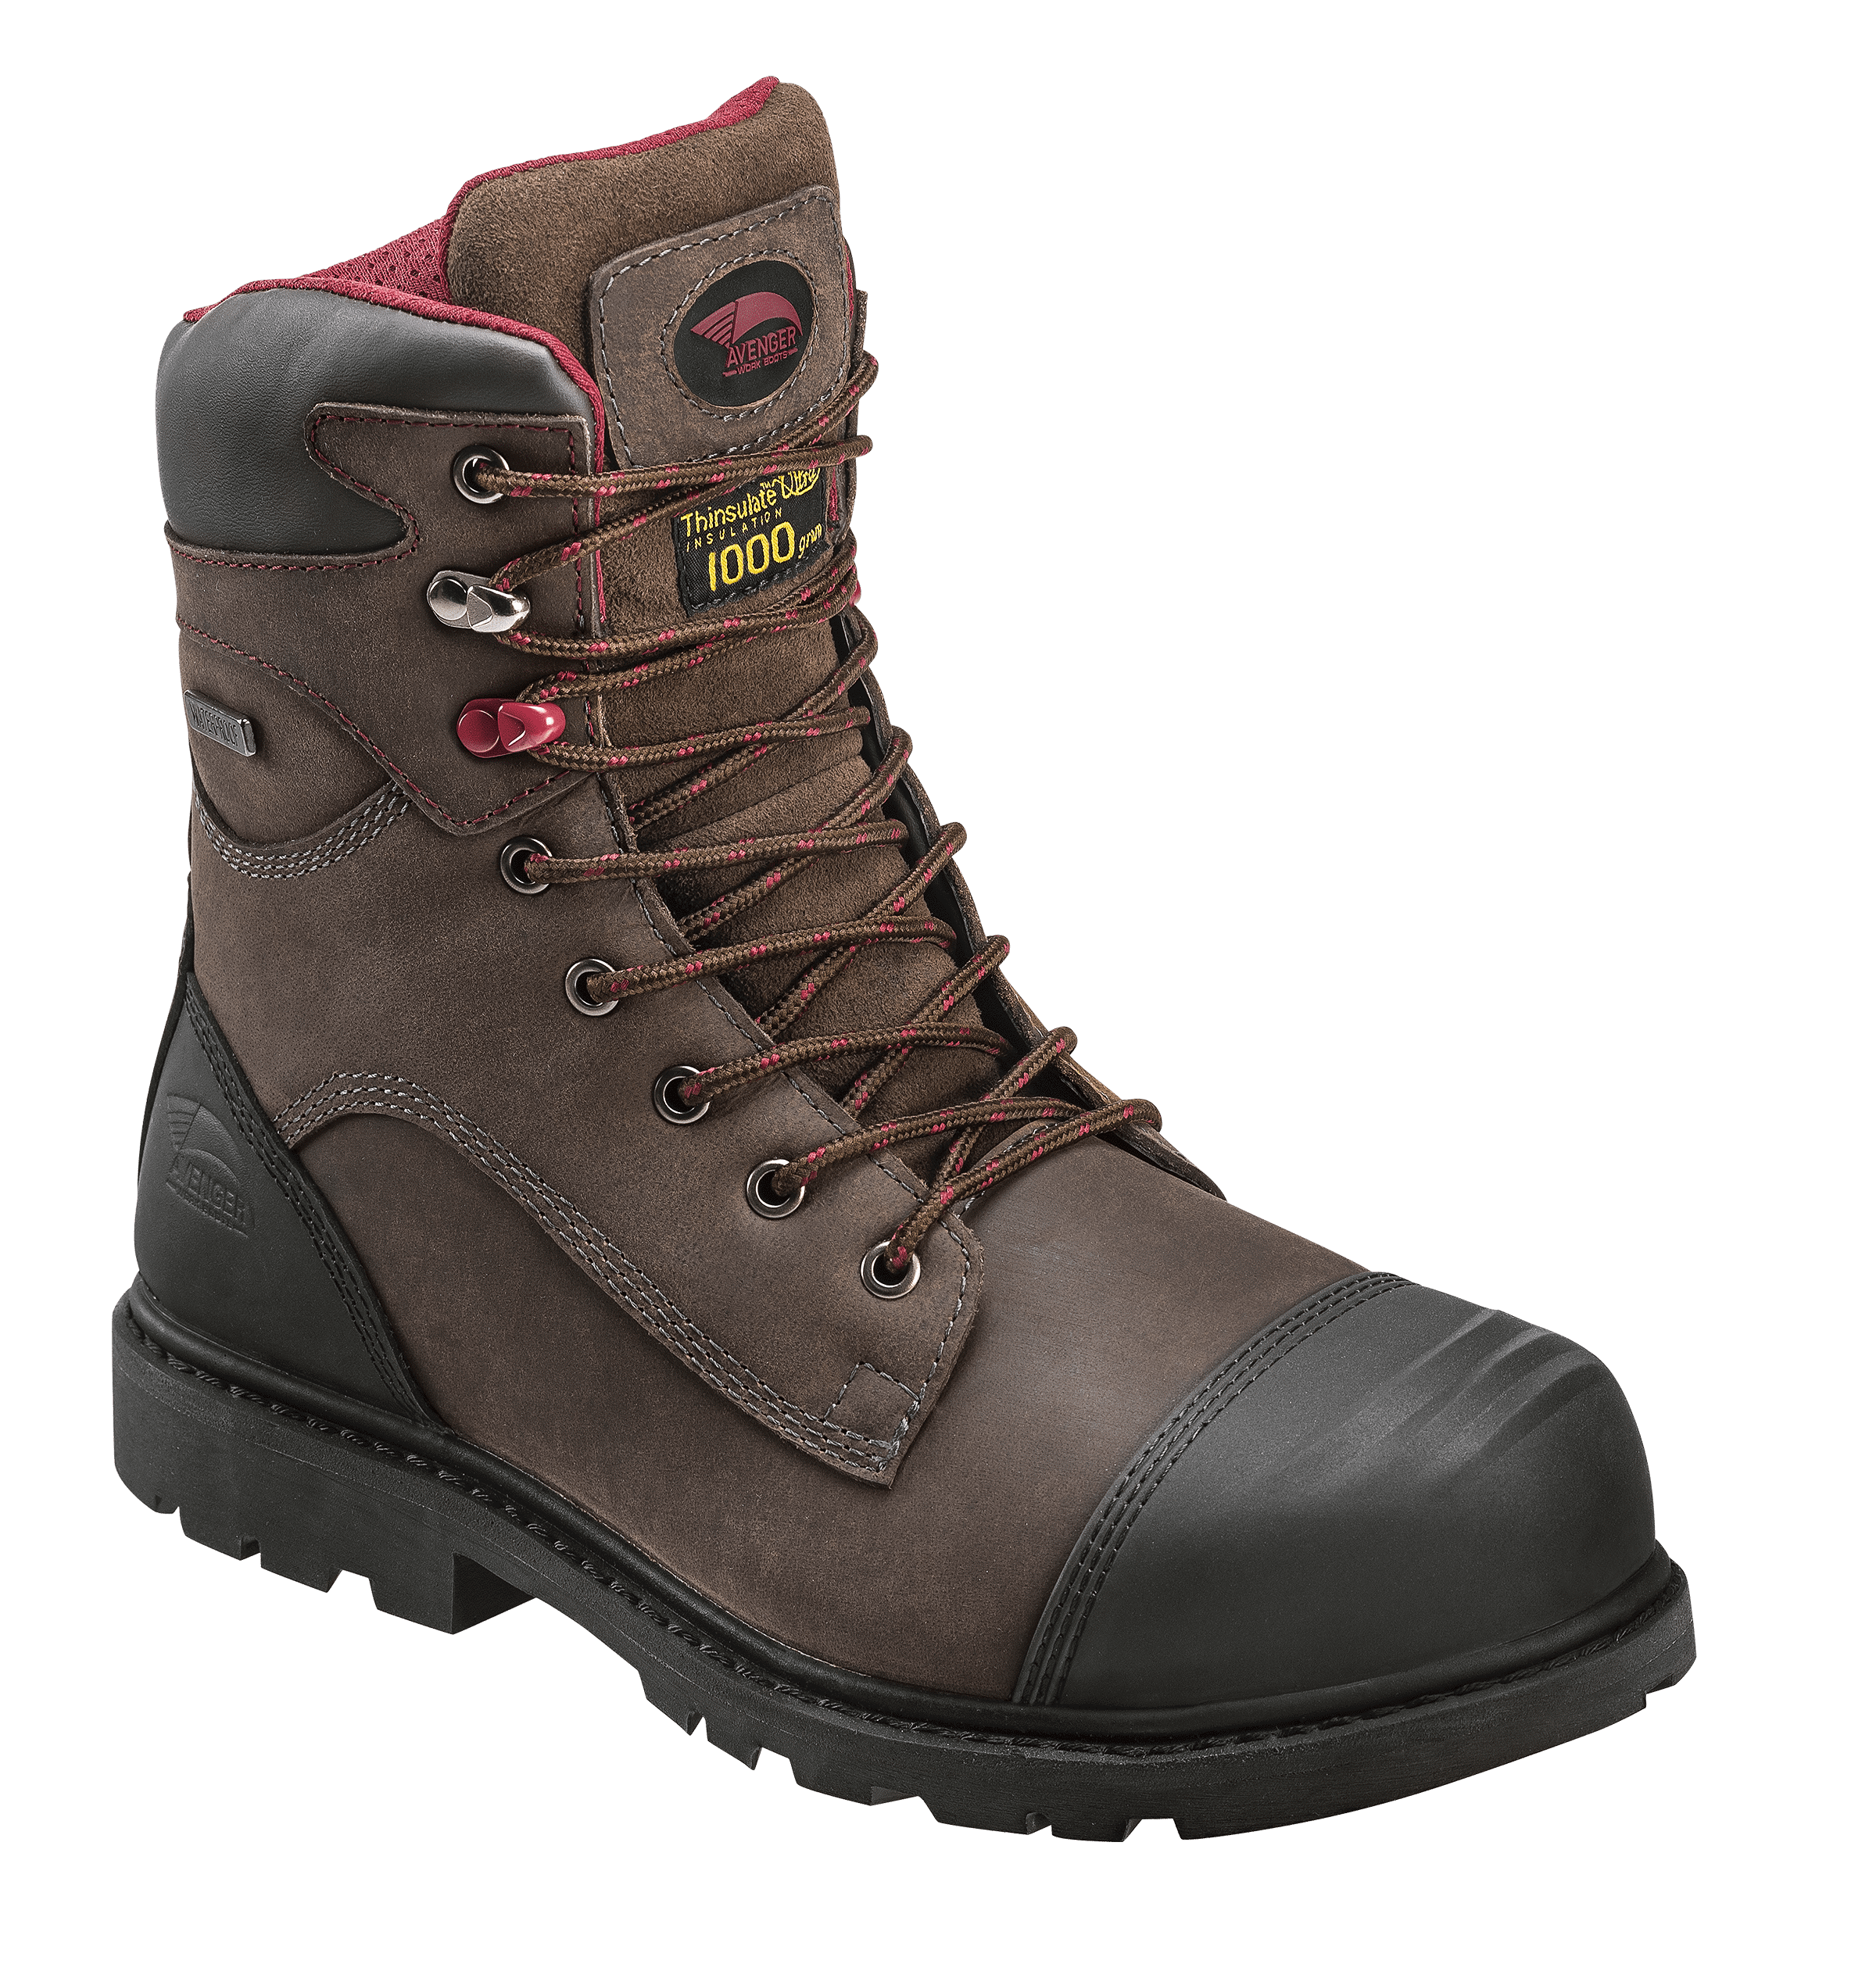 puncture resistant boots walmart